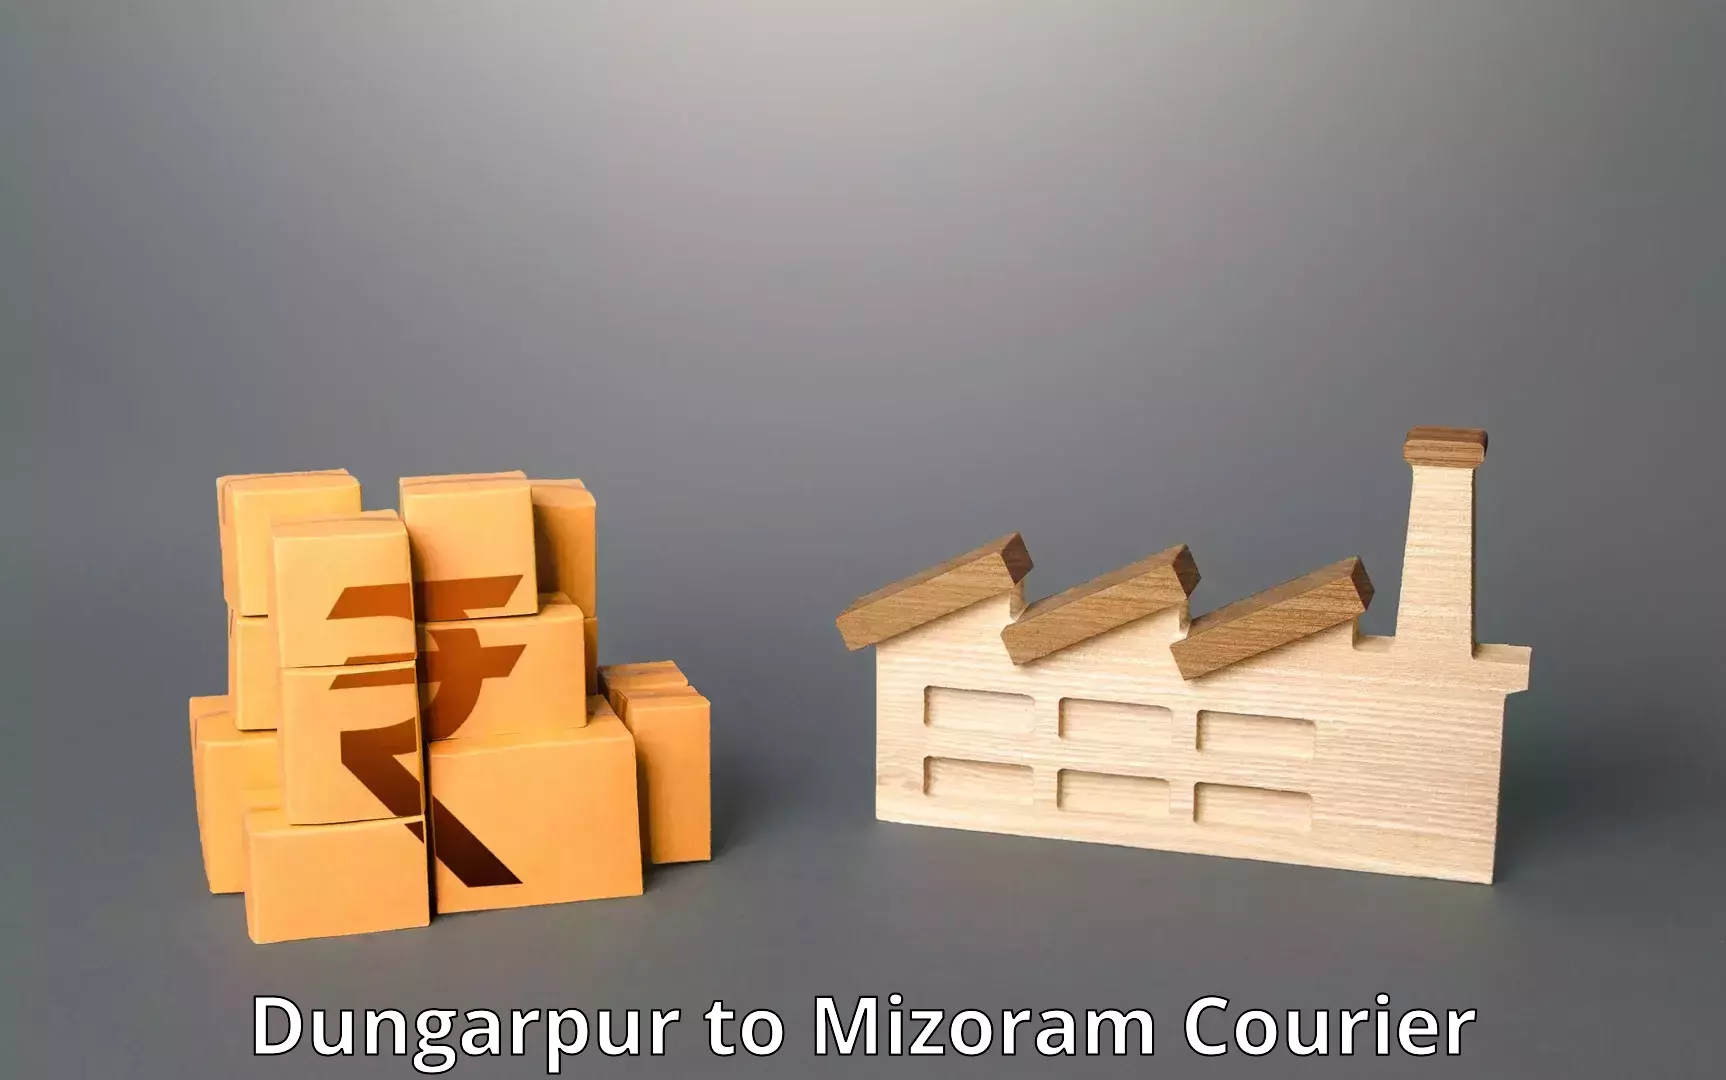 Digital courier platforms Dungarpur to Mizoram